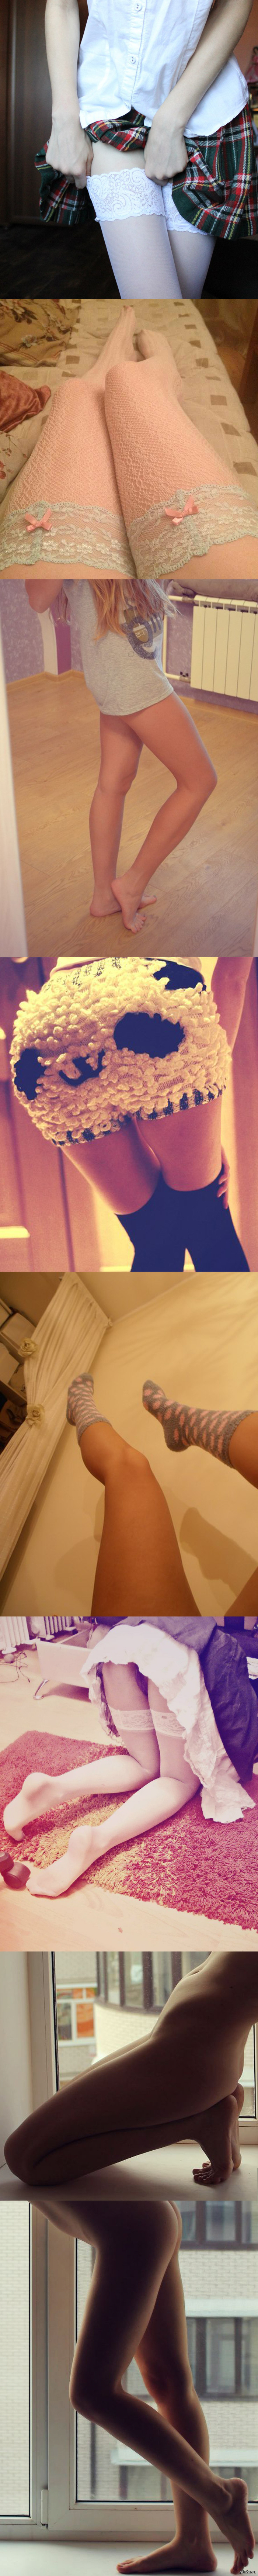 beautiful legs - Longpost, Fetishism, Sexuality, Girls, Gracefulness, Legs, NSFW